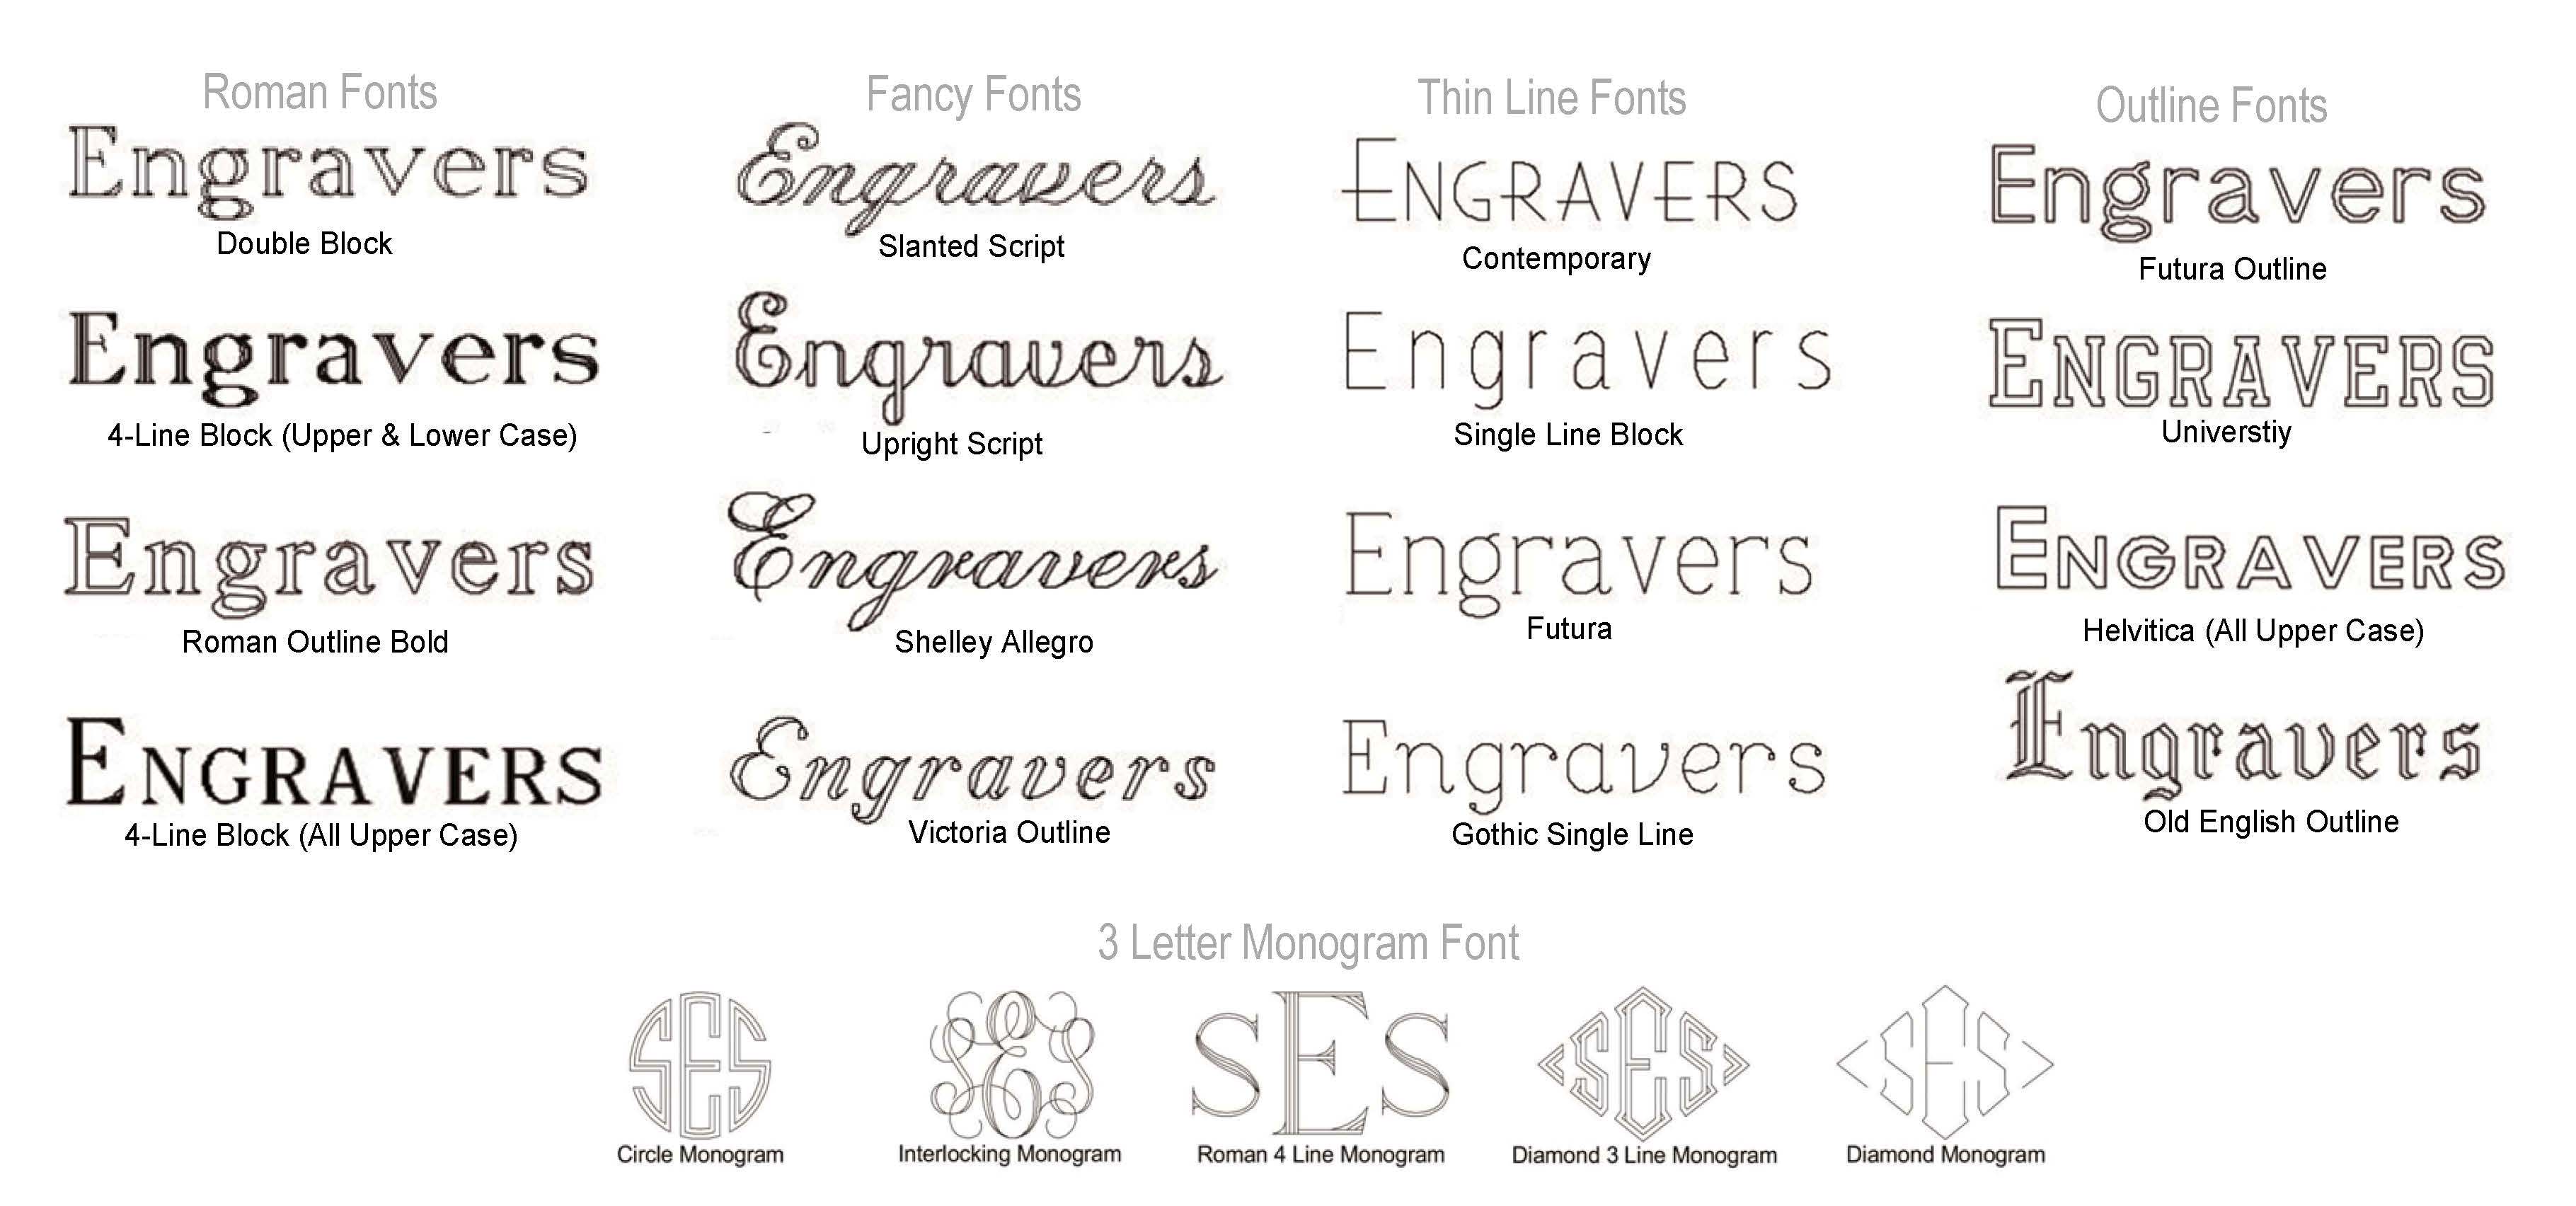 pages-from-engraving-font-emblem-flyer.pdf.jpg